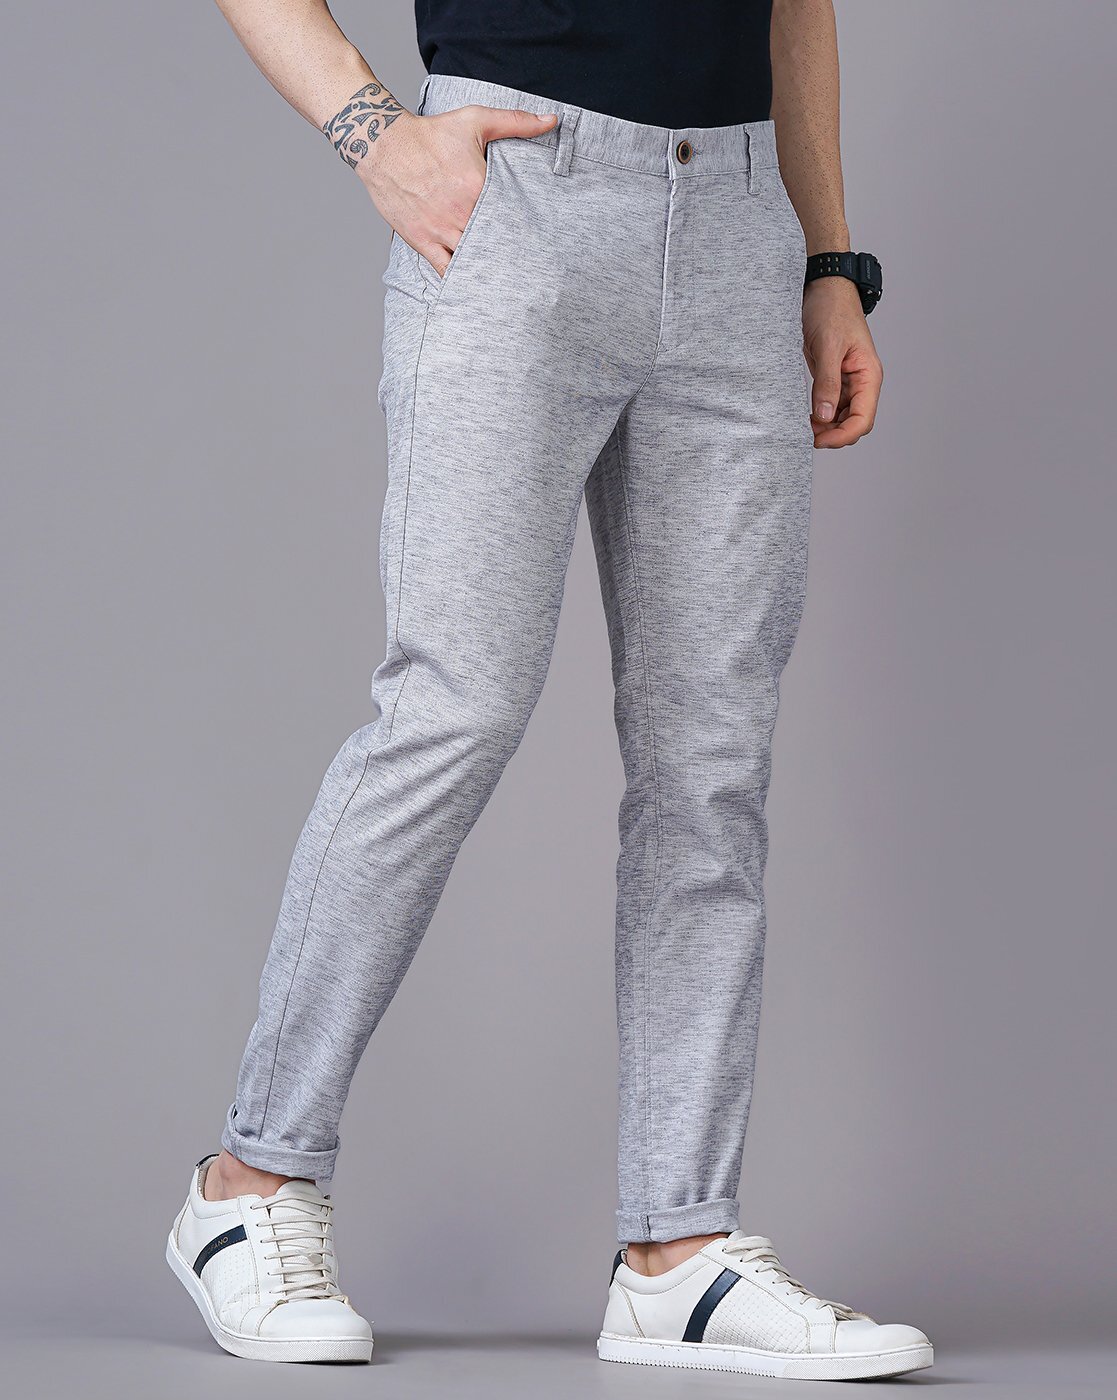 Lycra Grey Men Casual Lounge Pants, Regular Fit at Rs 120/piece in Jodhpur  | ID: 2852902768030